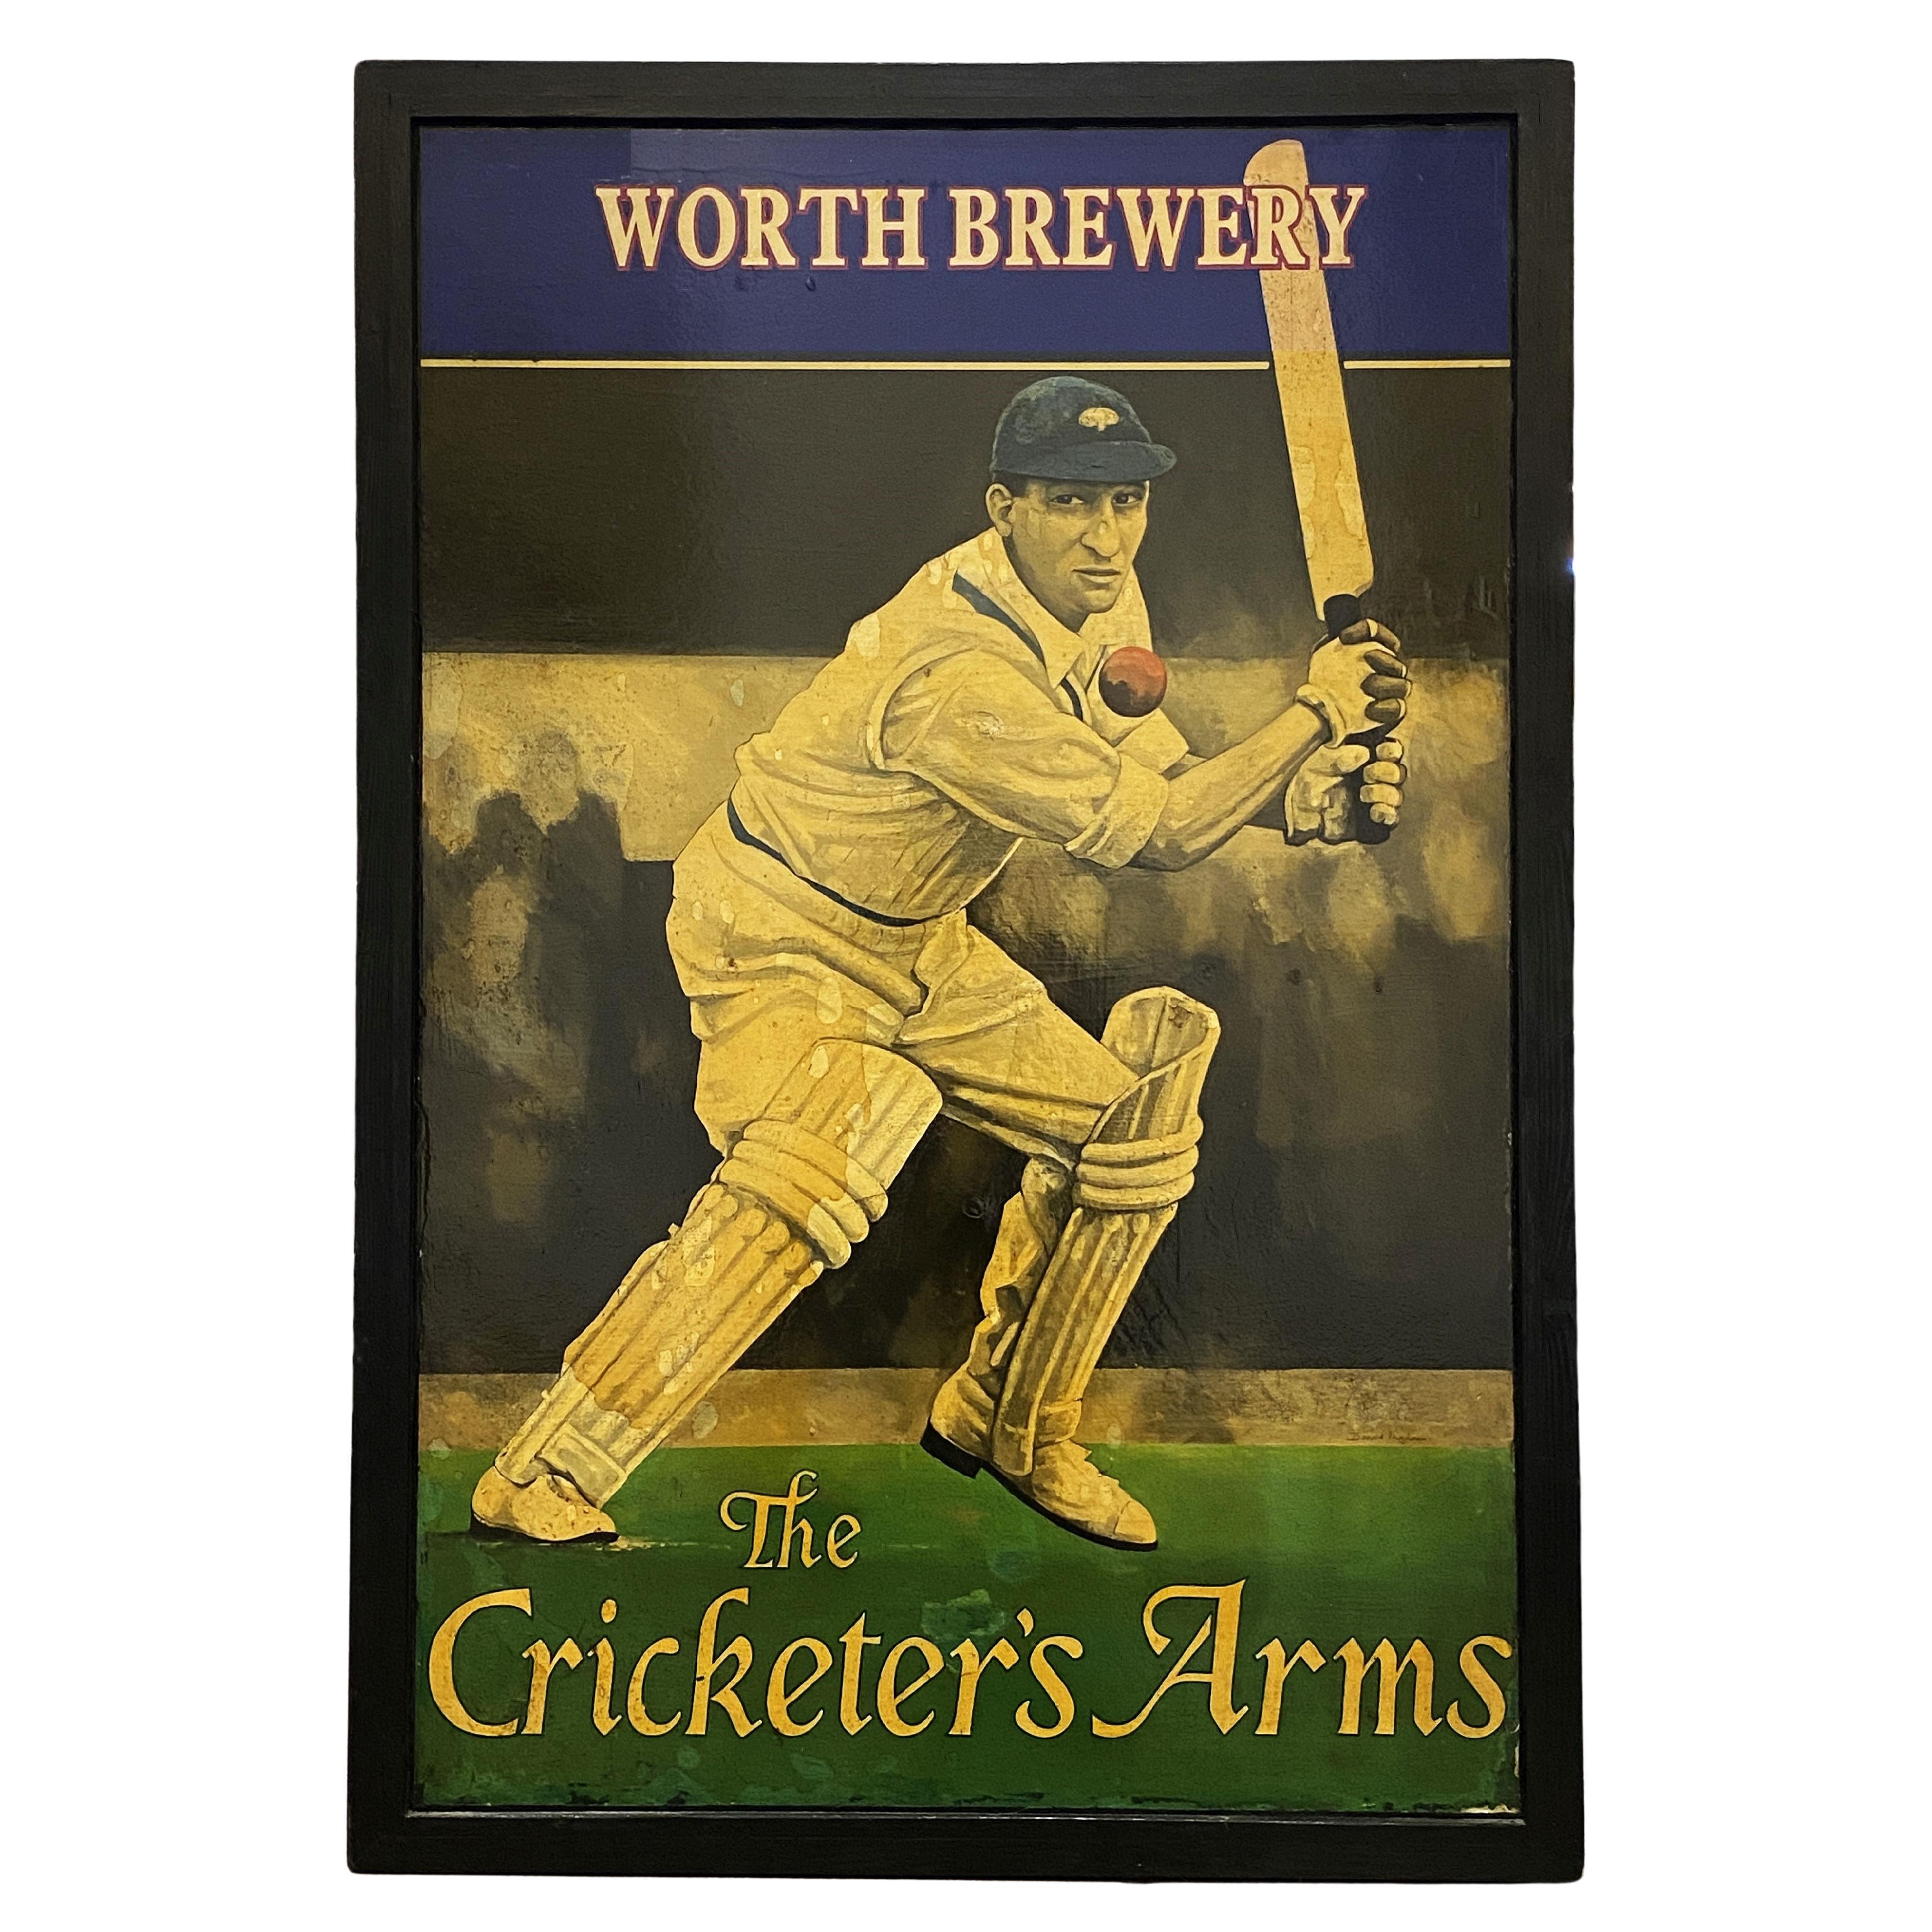 Enseigne de pub anglais, "Worth Brewery - The Cricketer's Arms".